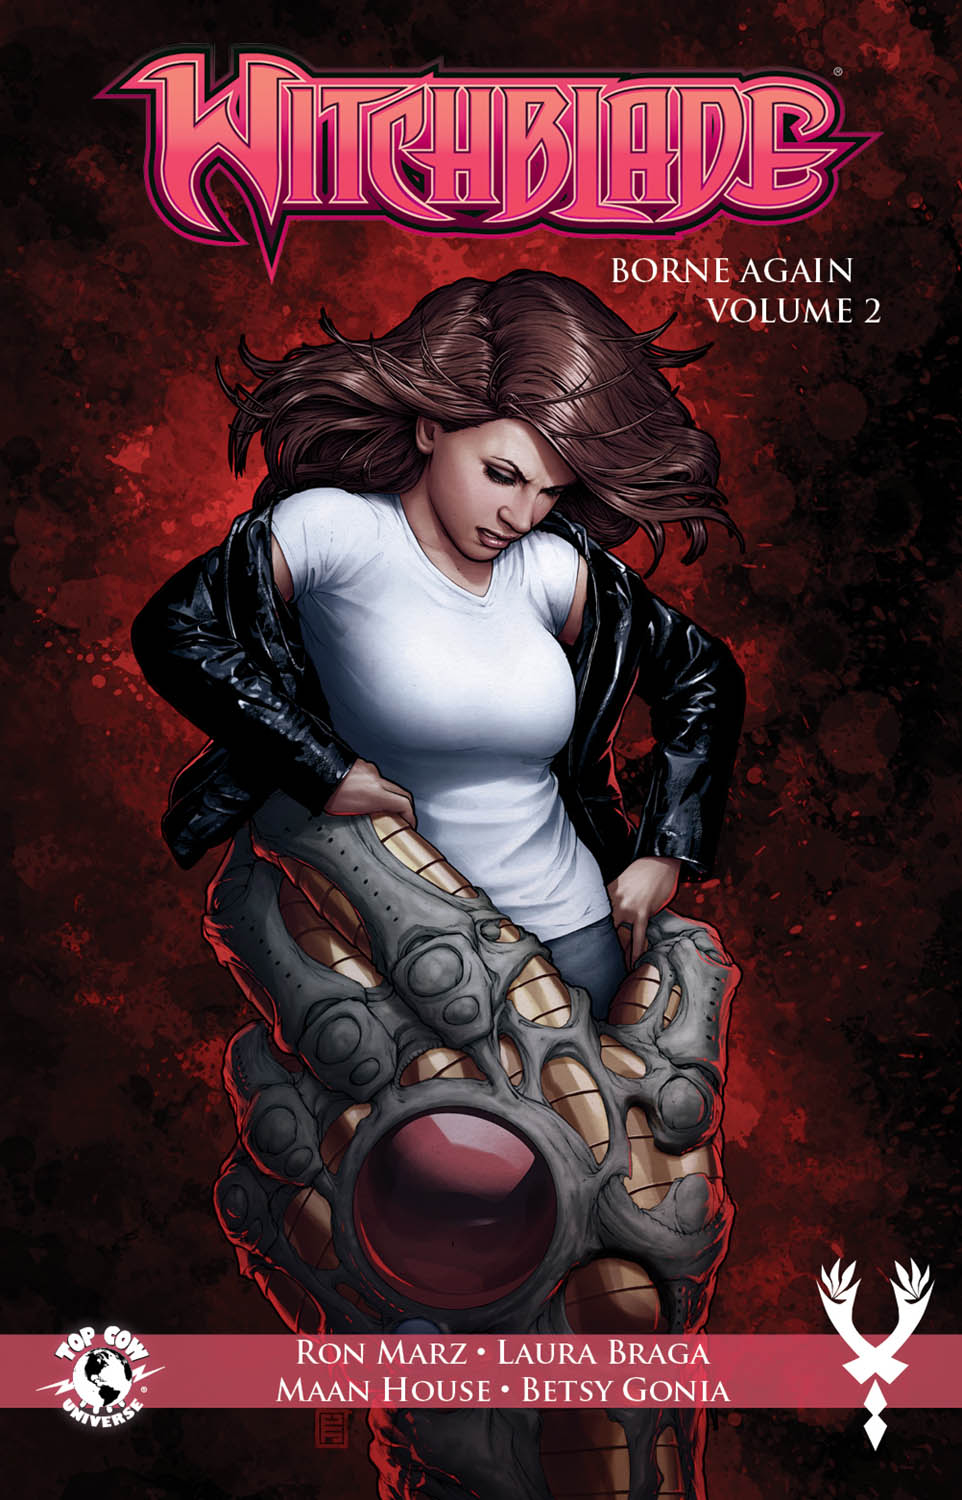 Witchblade Borne Again Graphic Novel Volume 2